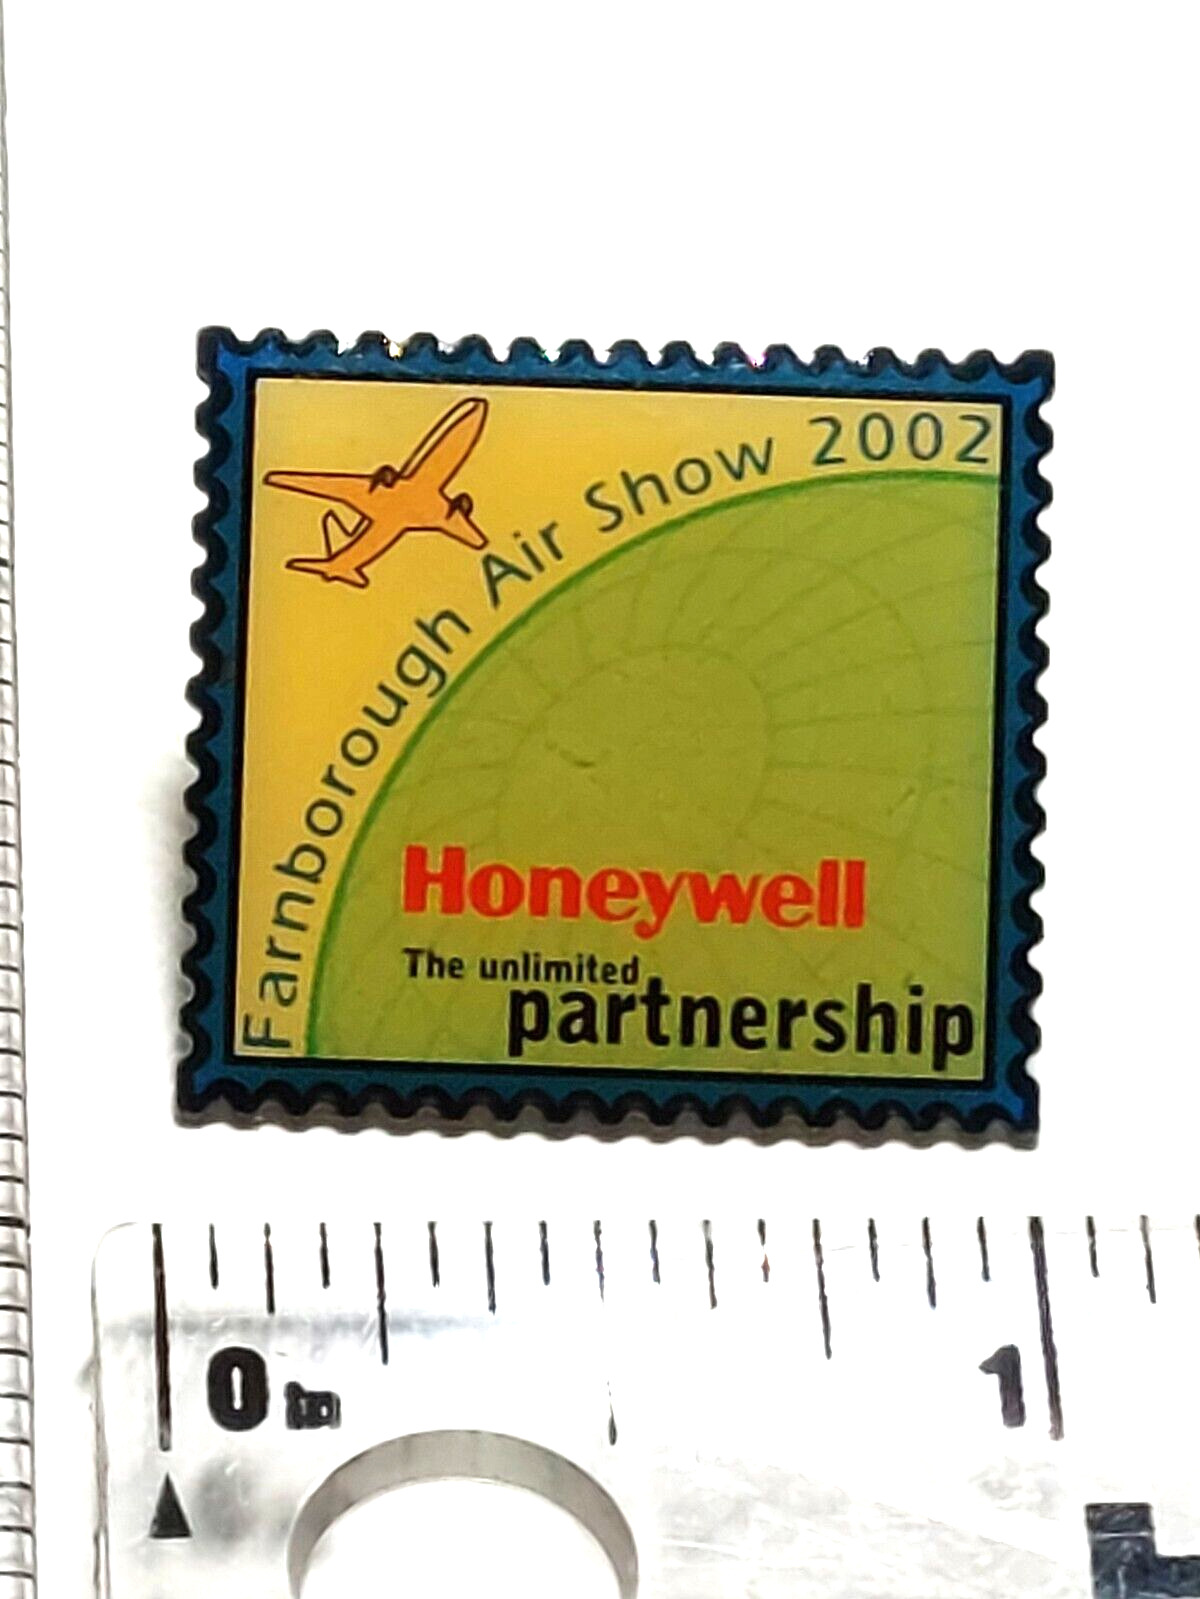 Farnborough Air Show 2002 England Honeywell Partnership Lapel Pin (020523)